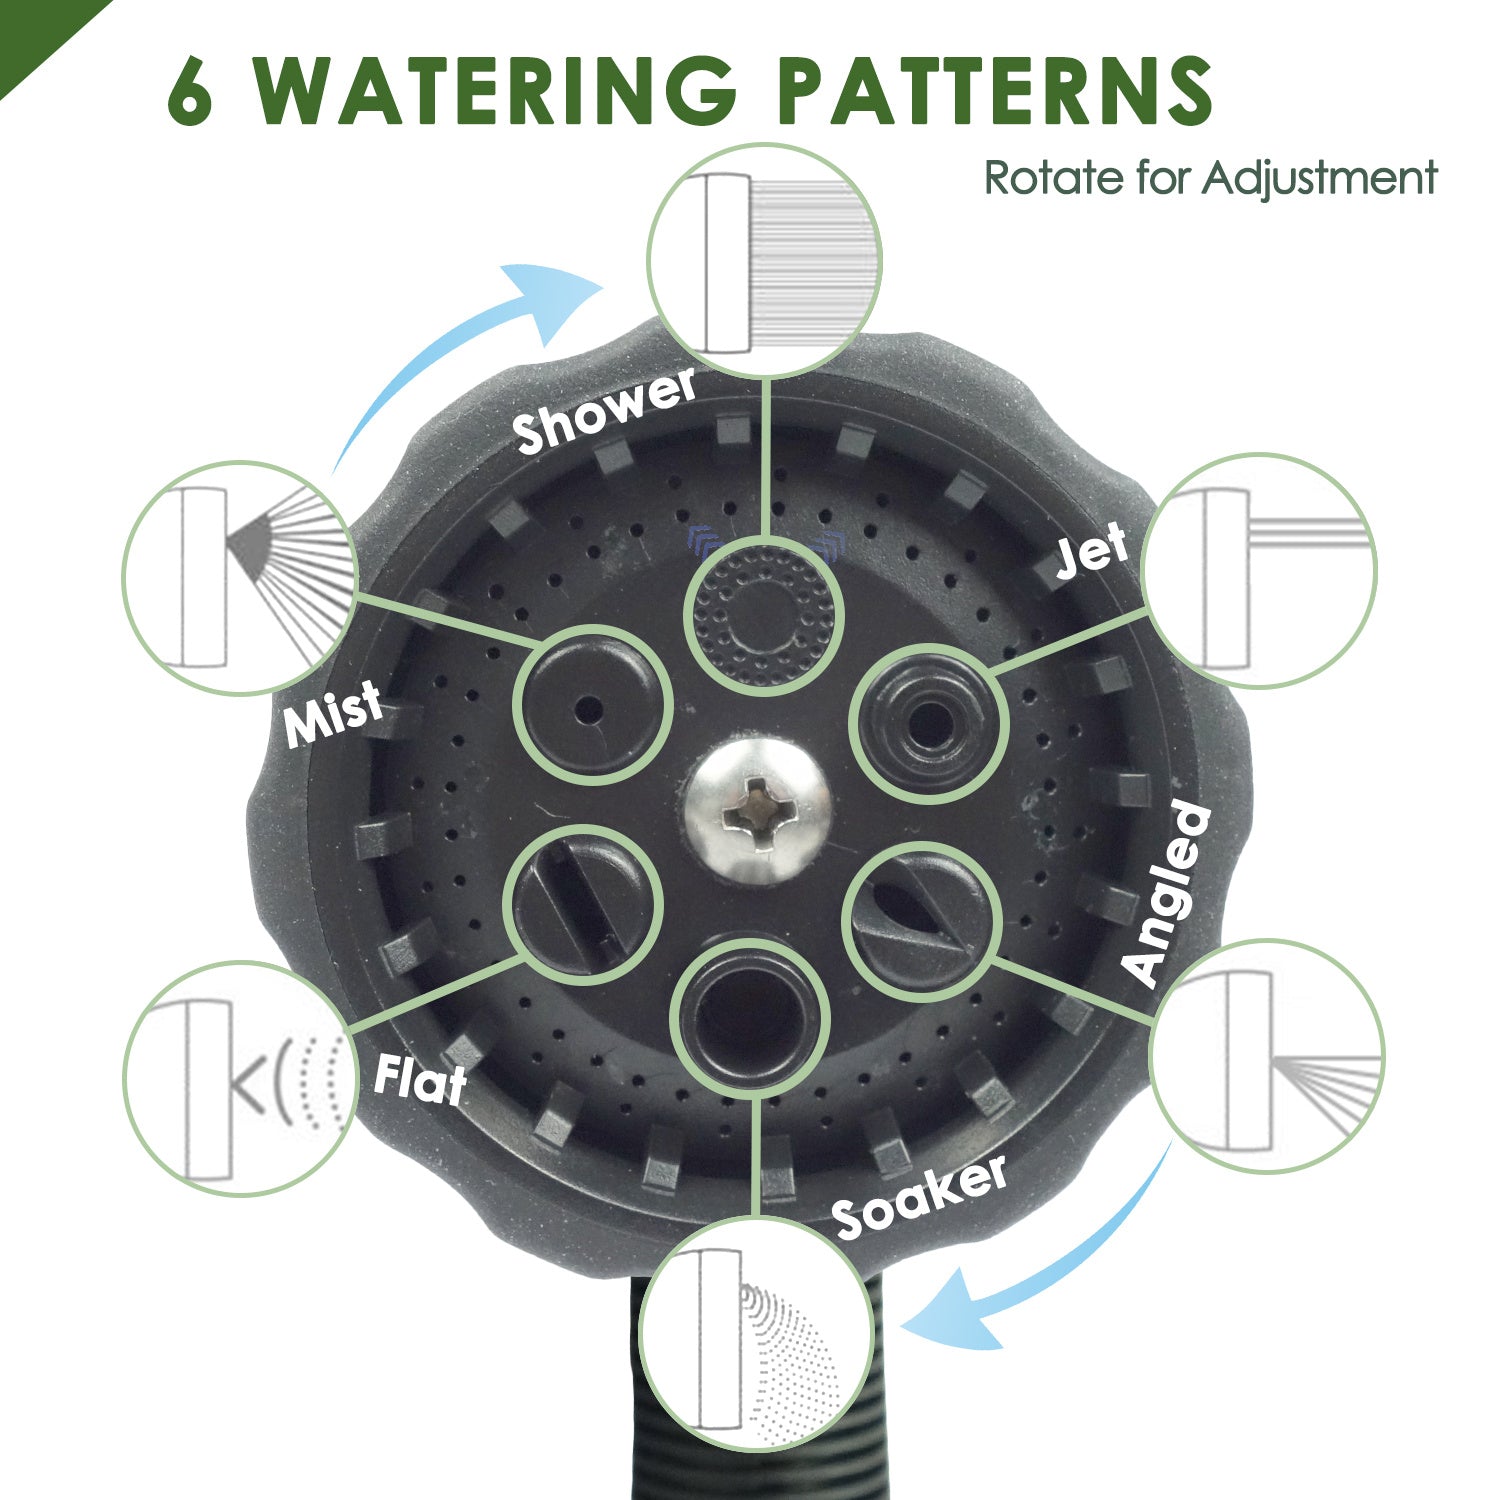 6 Watering Patterns